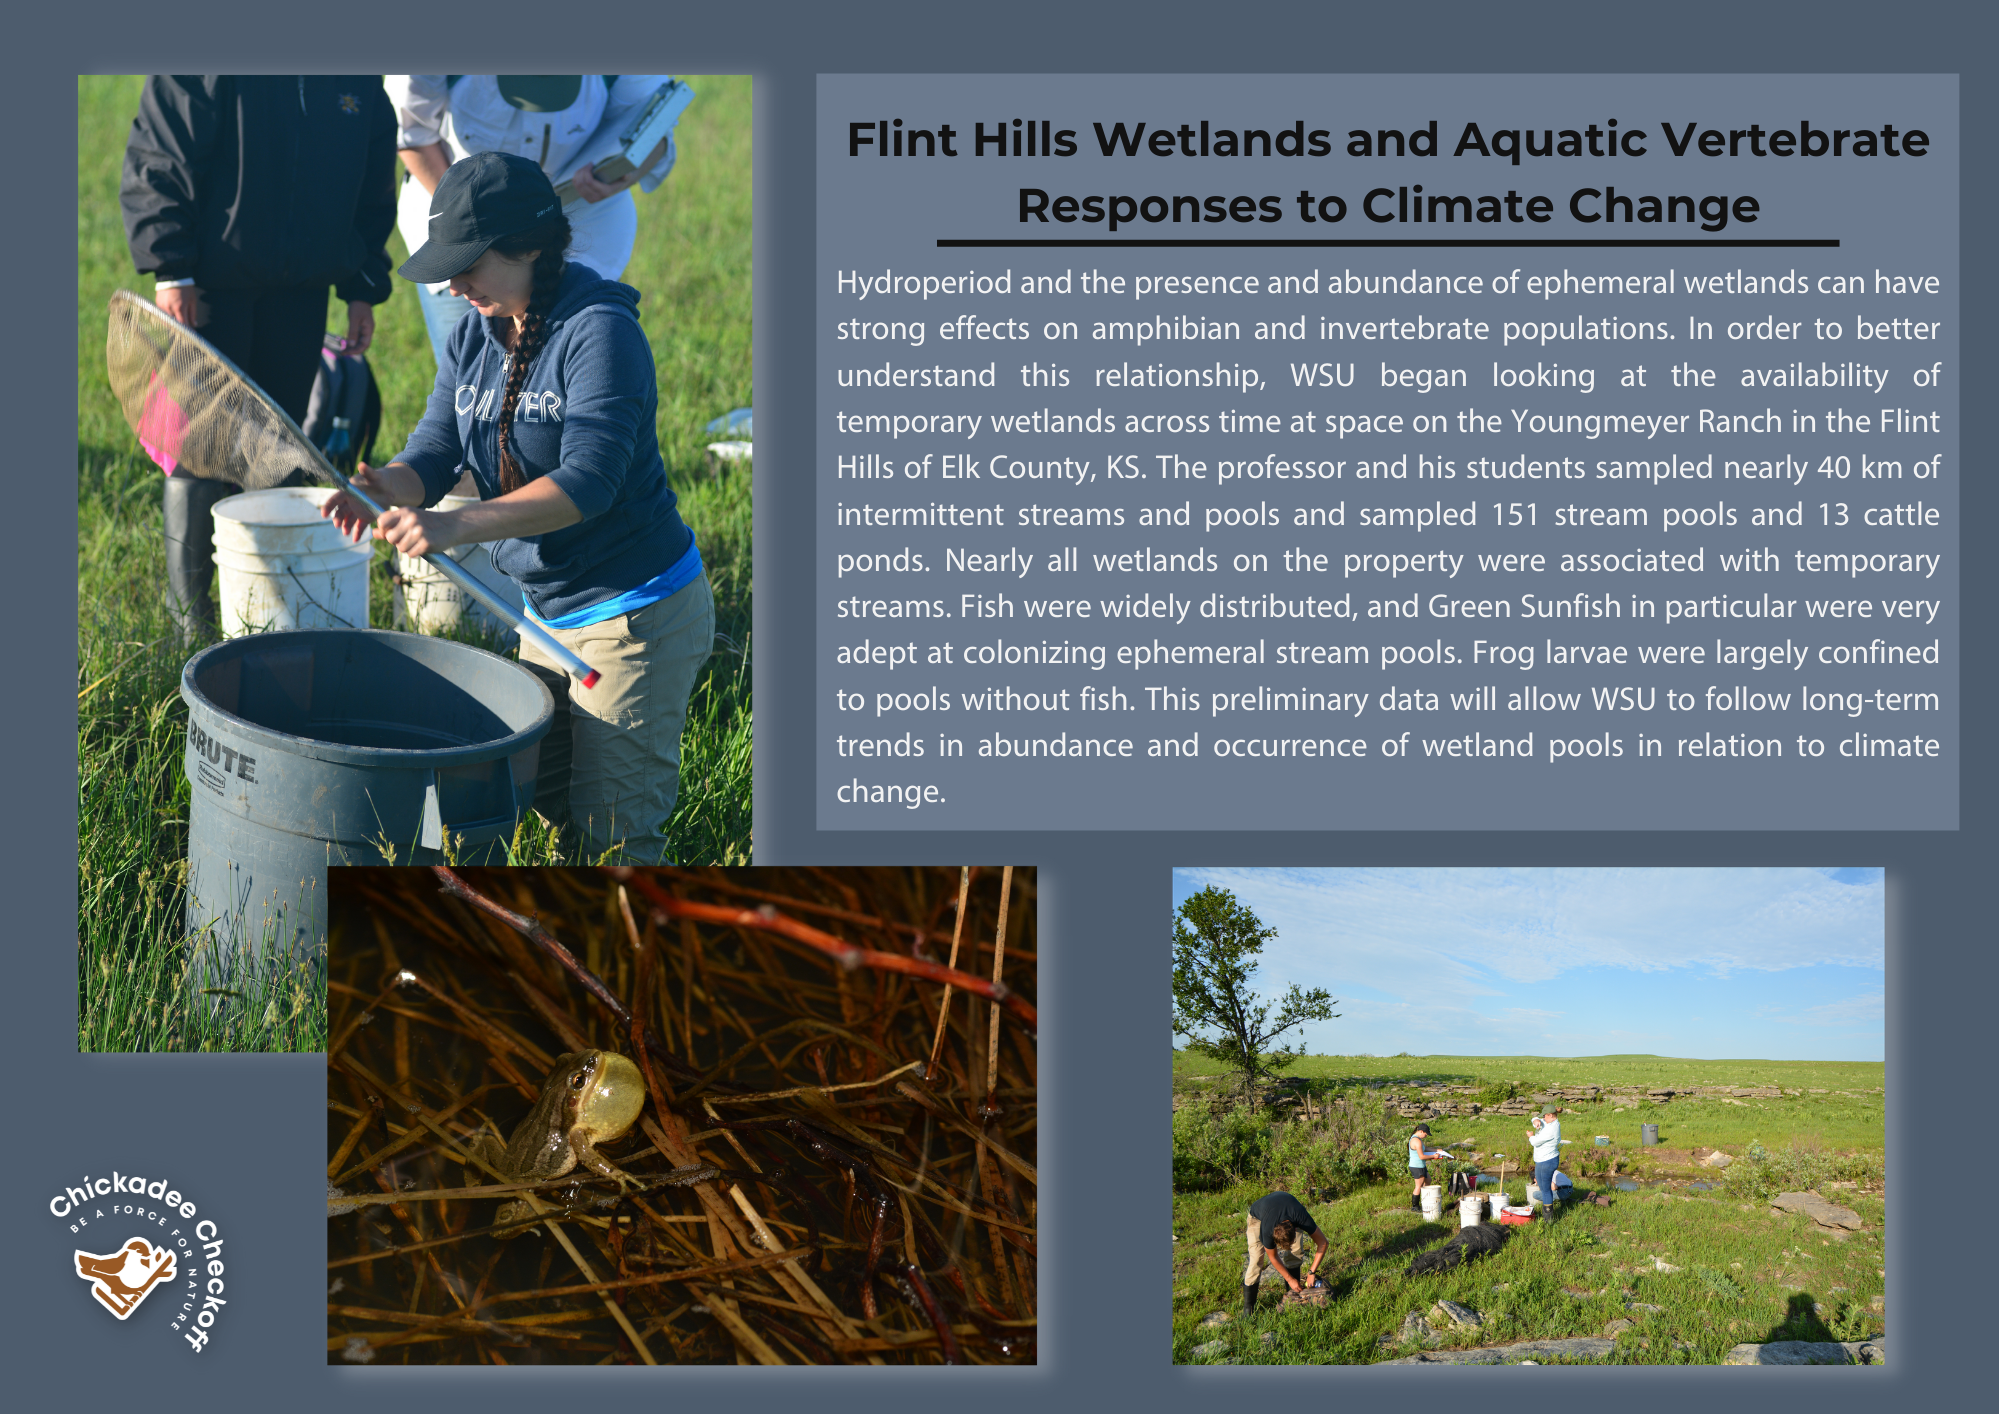 Flint Hills Wetlands and Aquatic Vertebrate Responses to Climate Change